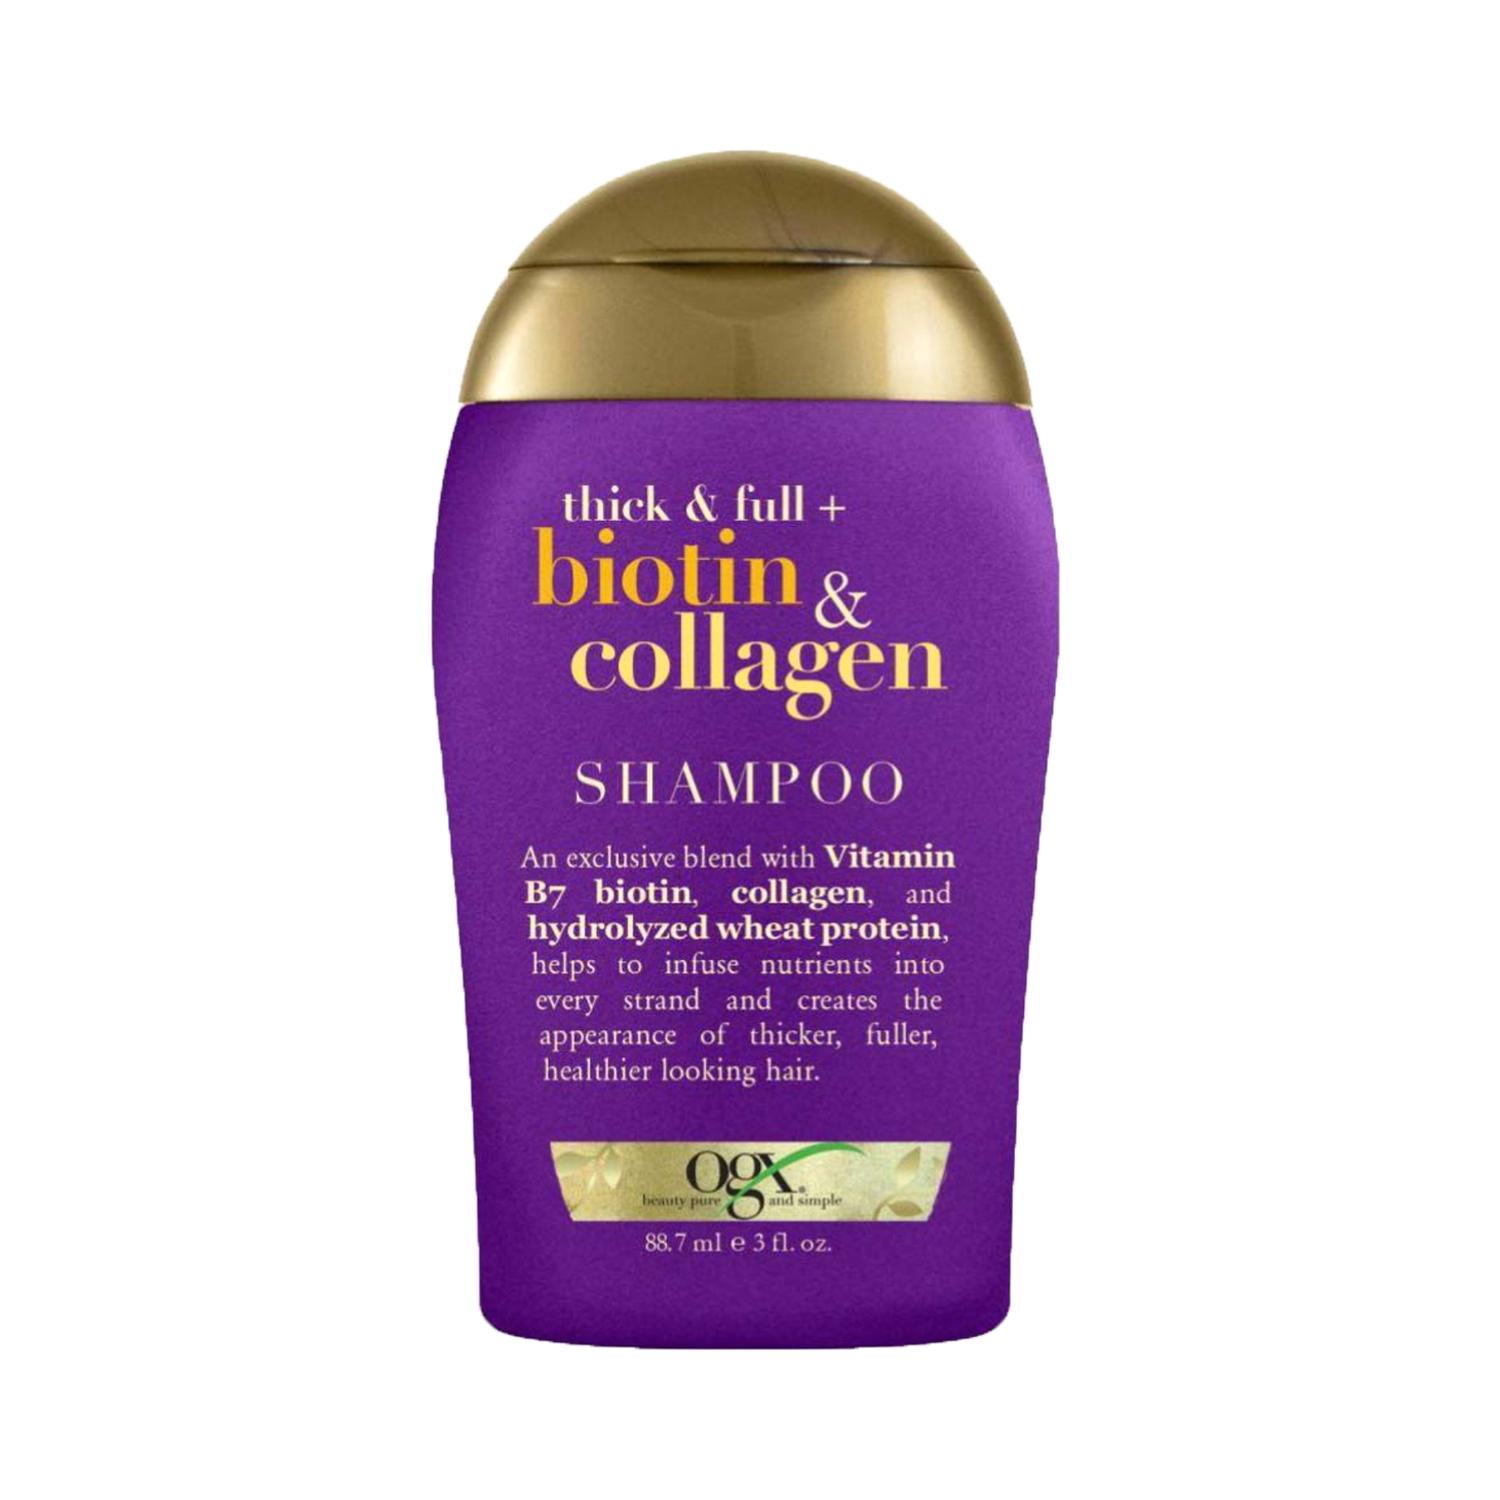 ogx thick & full biotin & collagen shampoo (88.7ml)